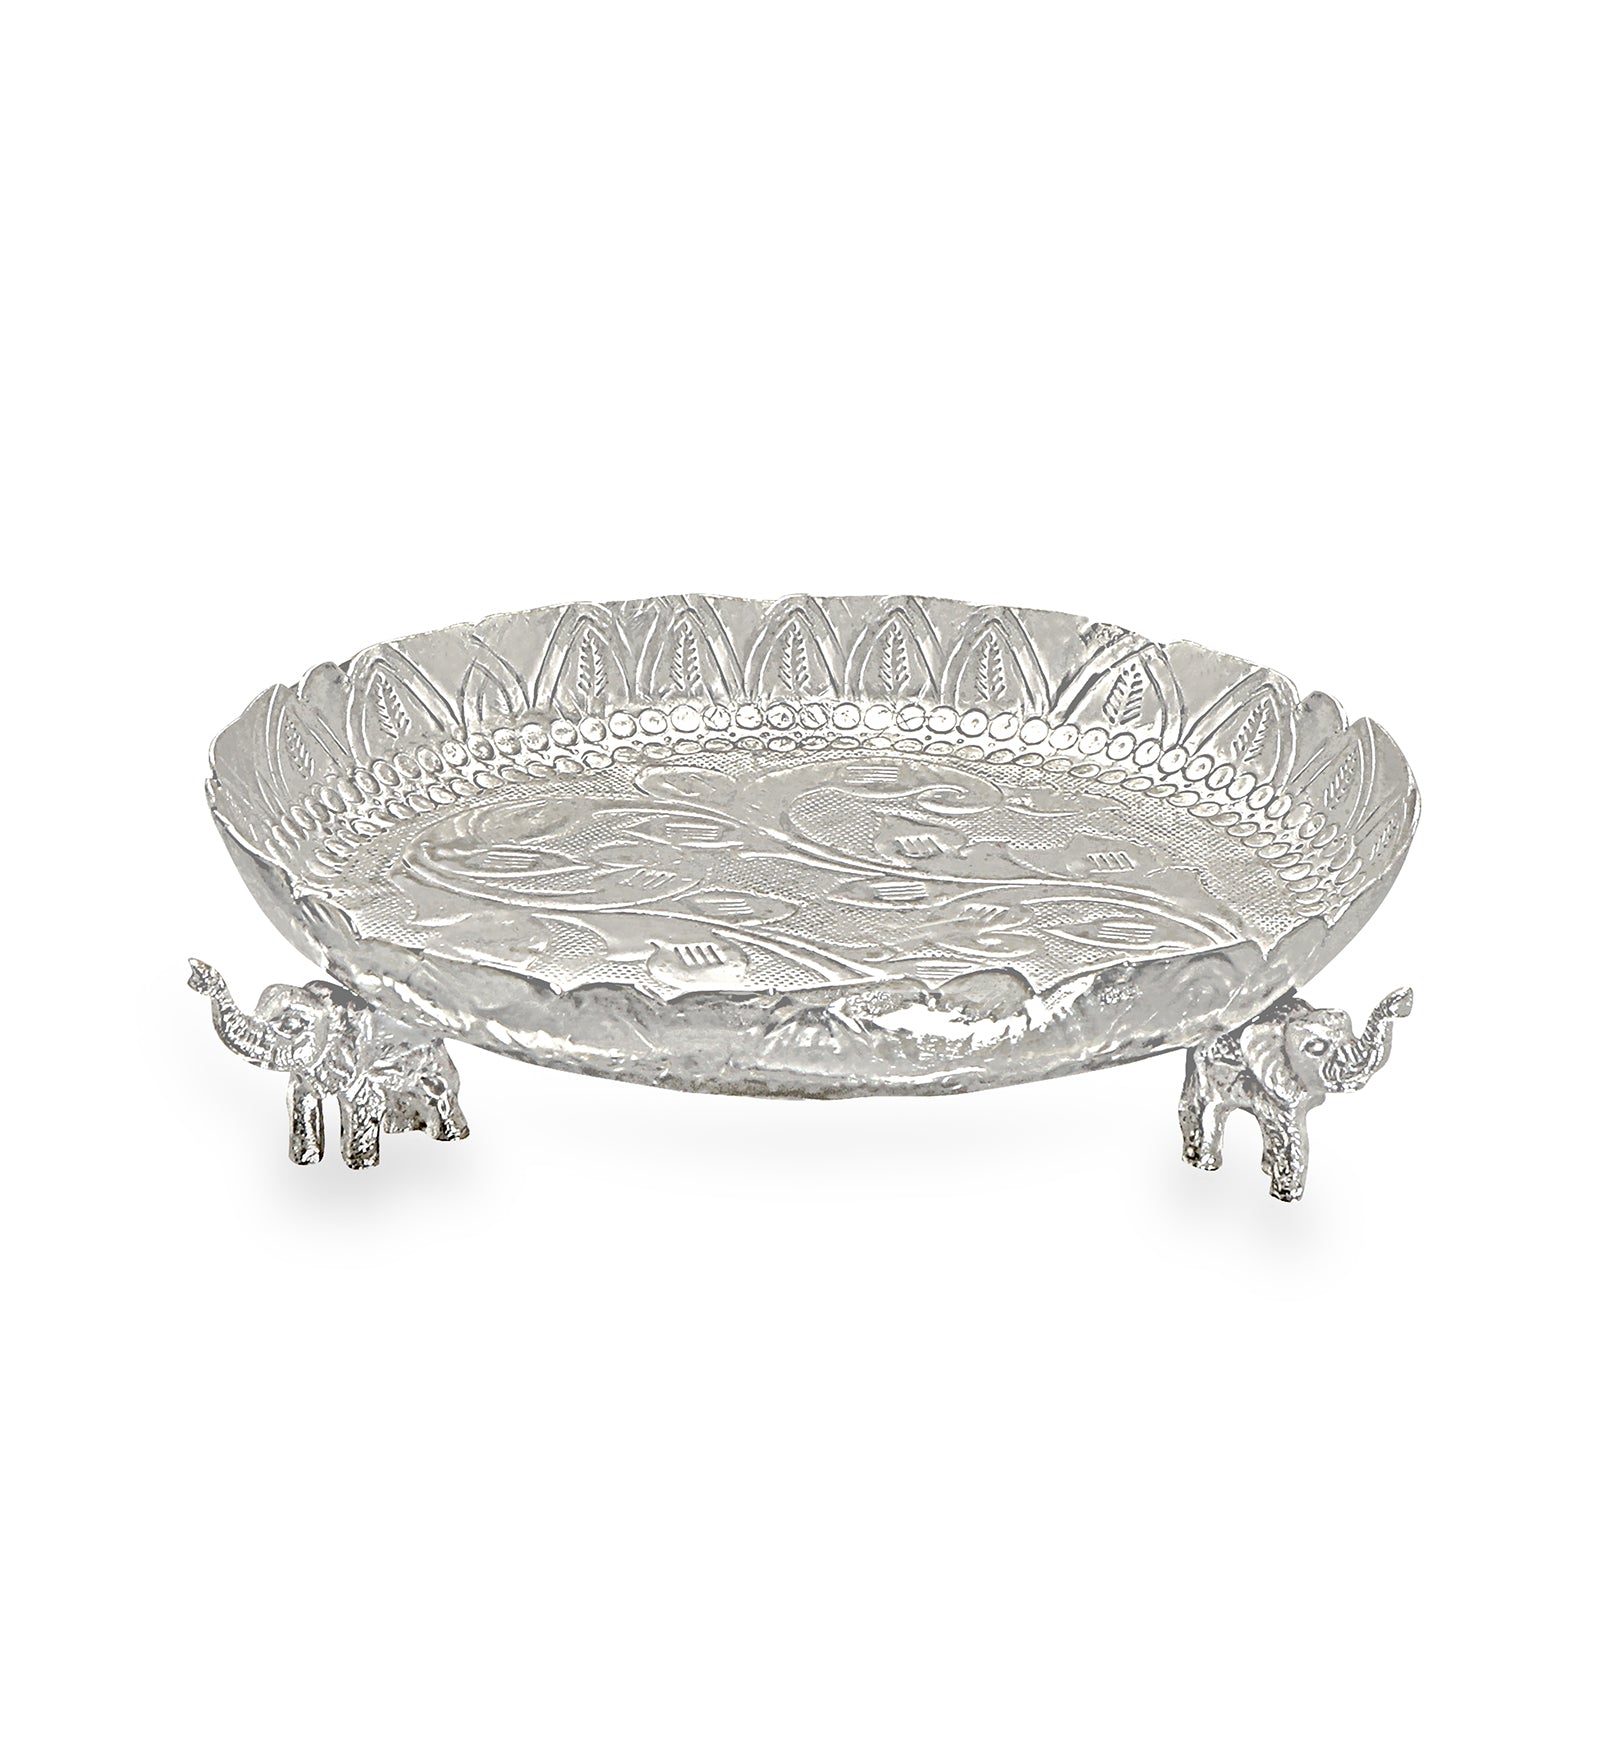 Silver Plated Platter Urli- Large - Elephant Urli 3- The Home Co.